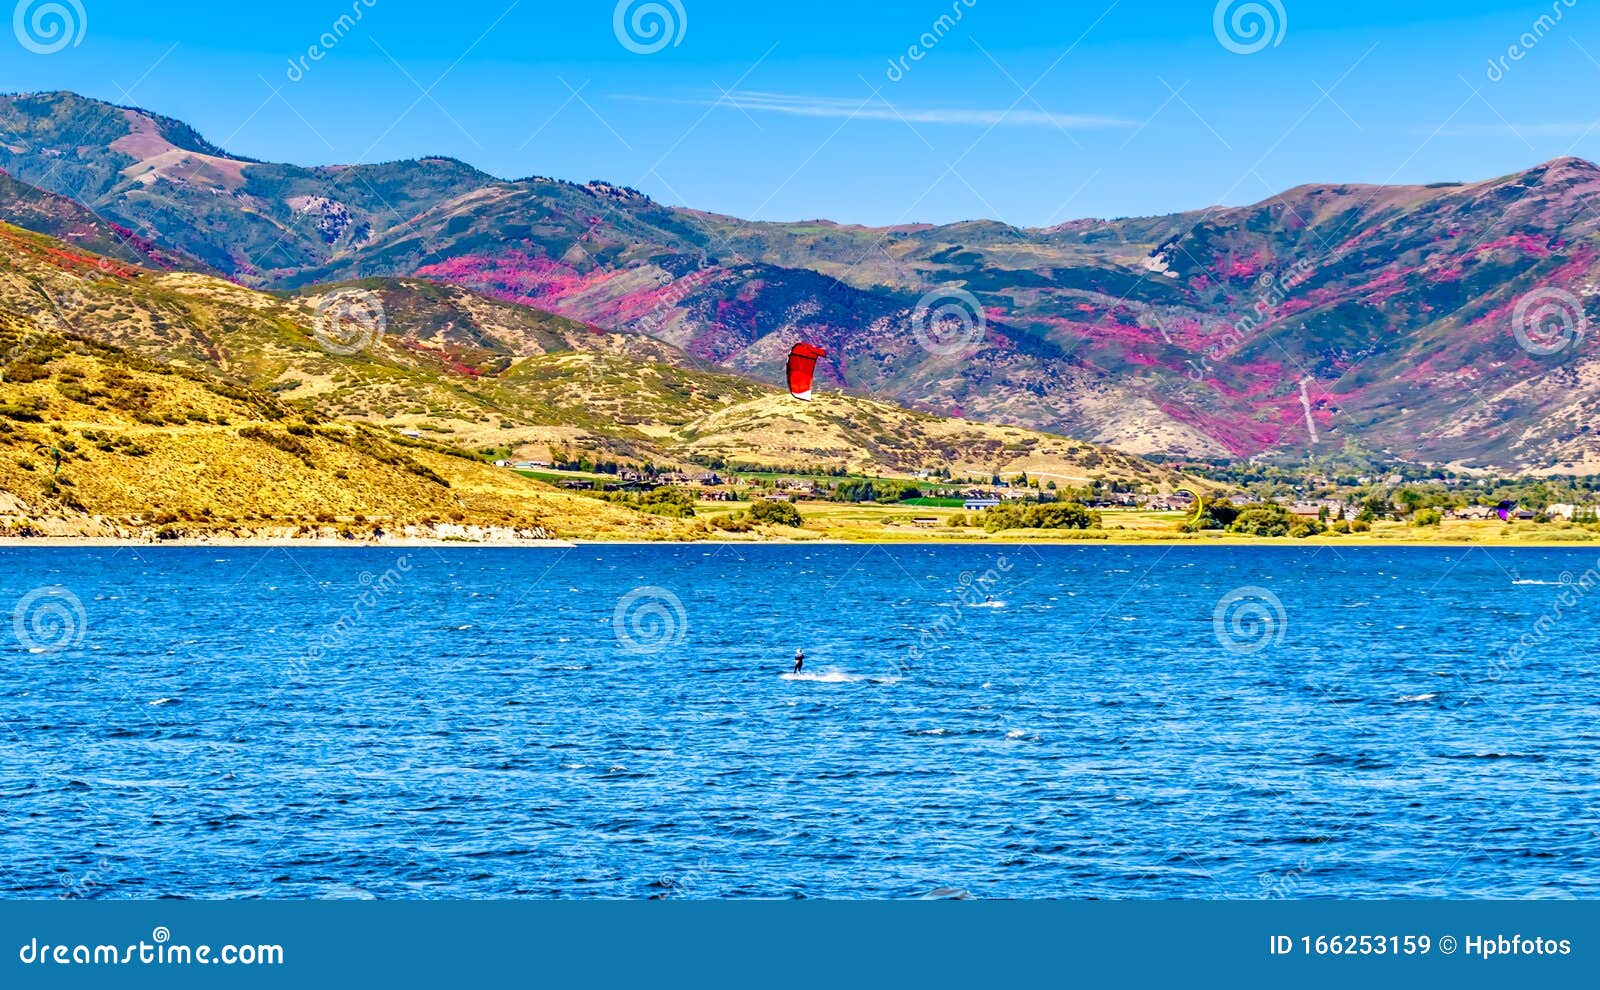 Kite Surfing Deer Creek Reservoir Near Provo Utah United States Sept Surrounded Fall Colors Hills 166253159 